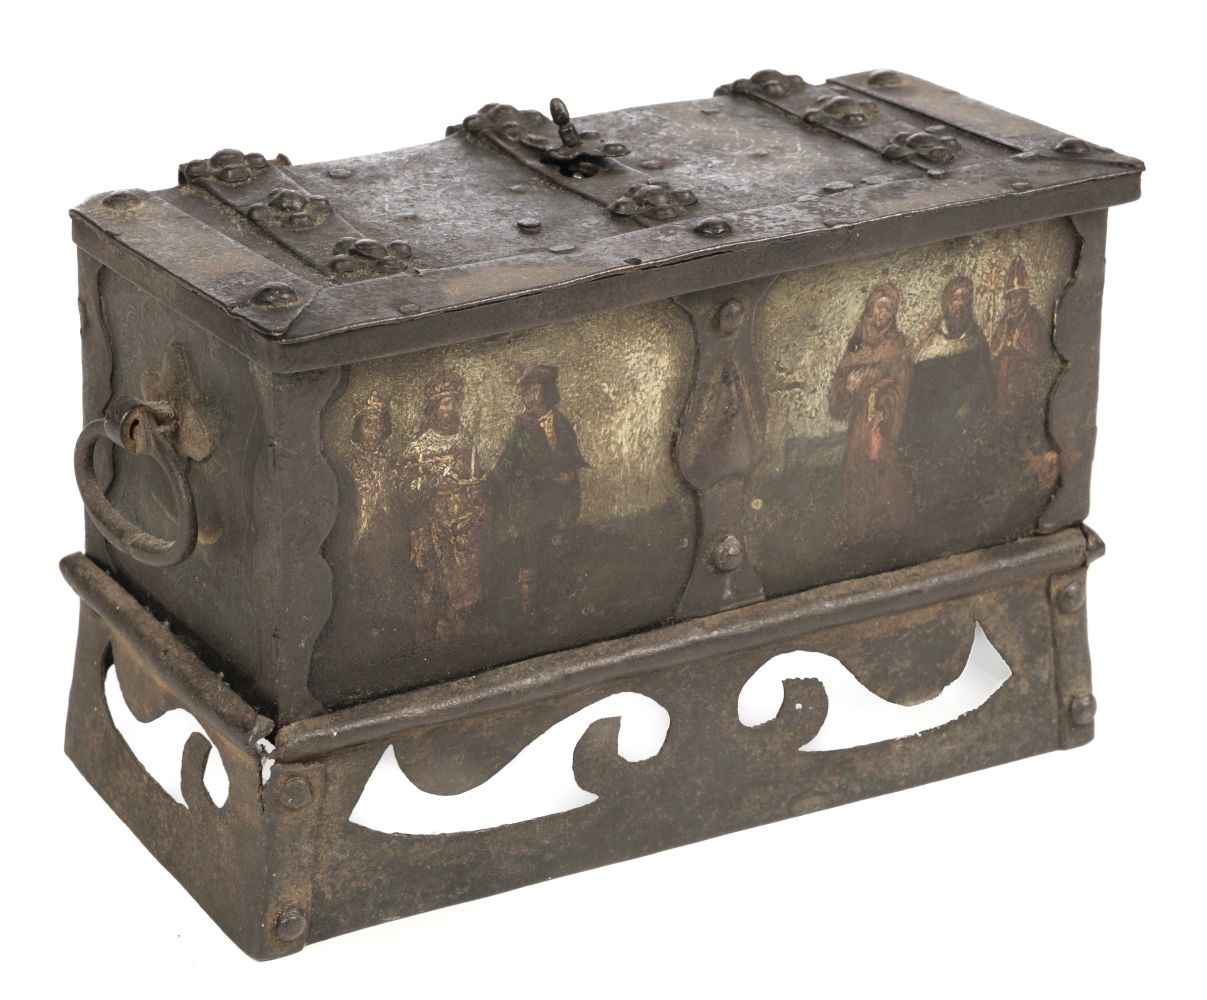 * Casket. German Nuremberg casket, probably 17th century